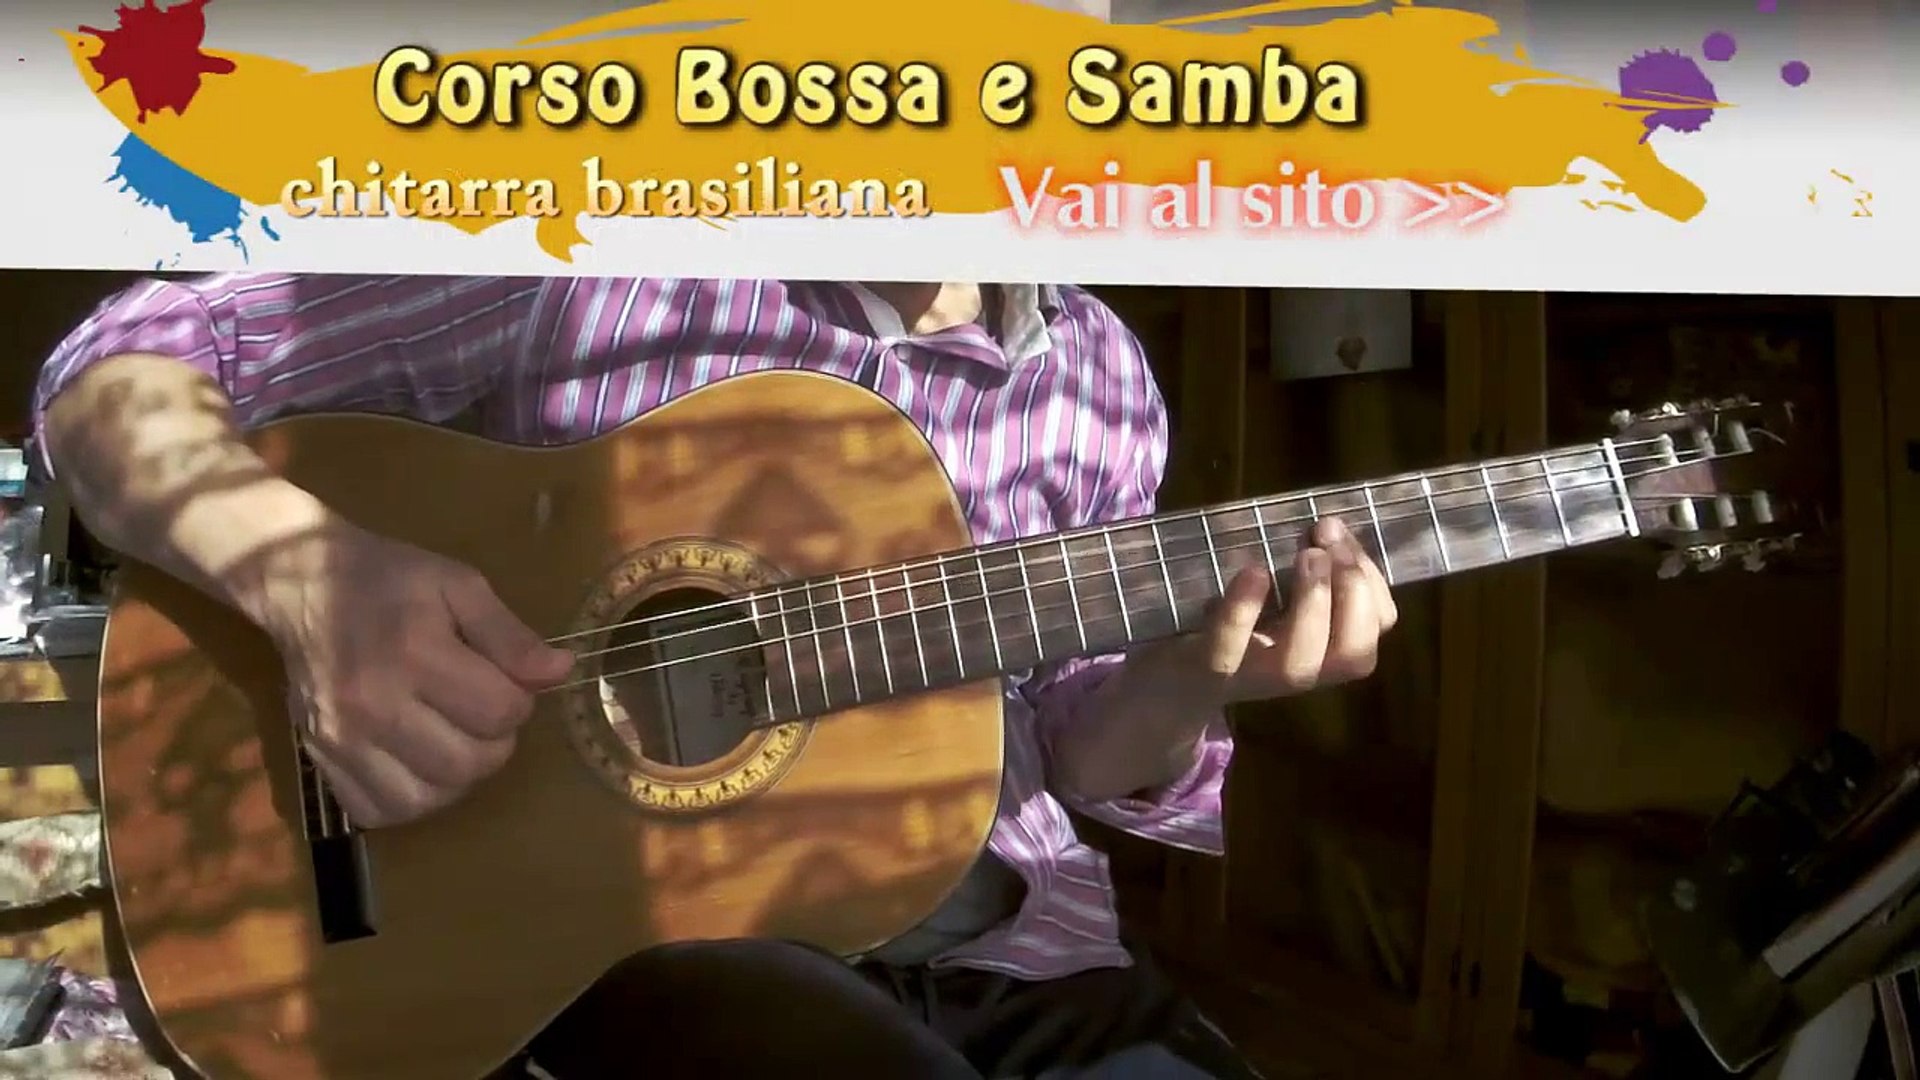 Bossa Nova e Samba - Chitarra brasiliana - Video Dailymotion